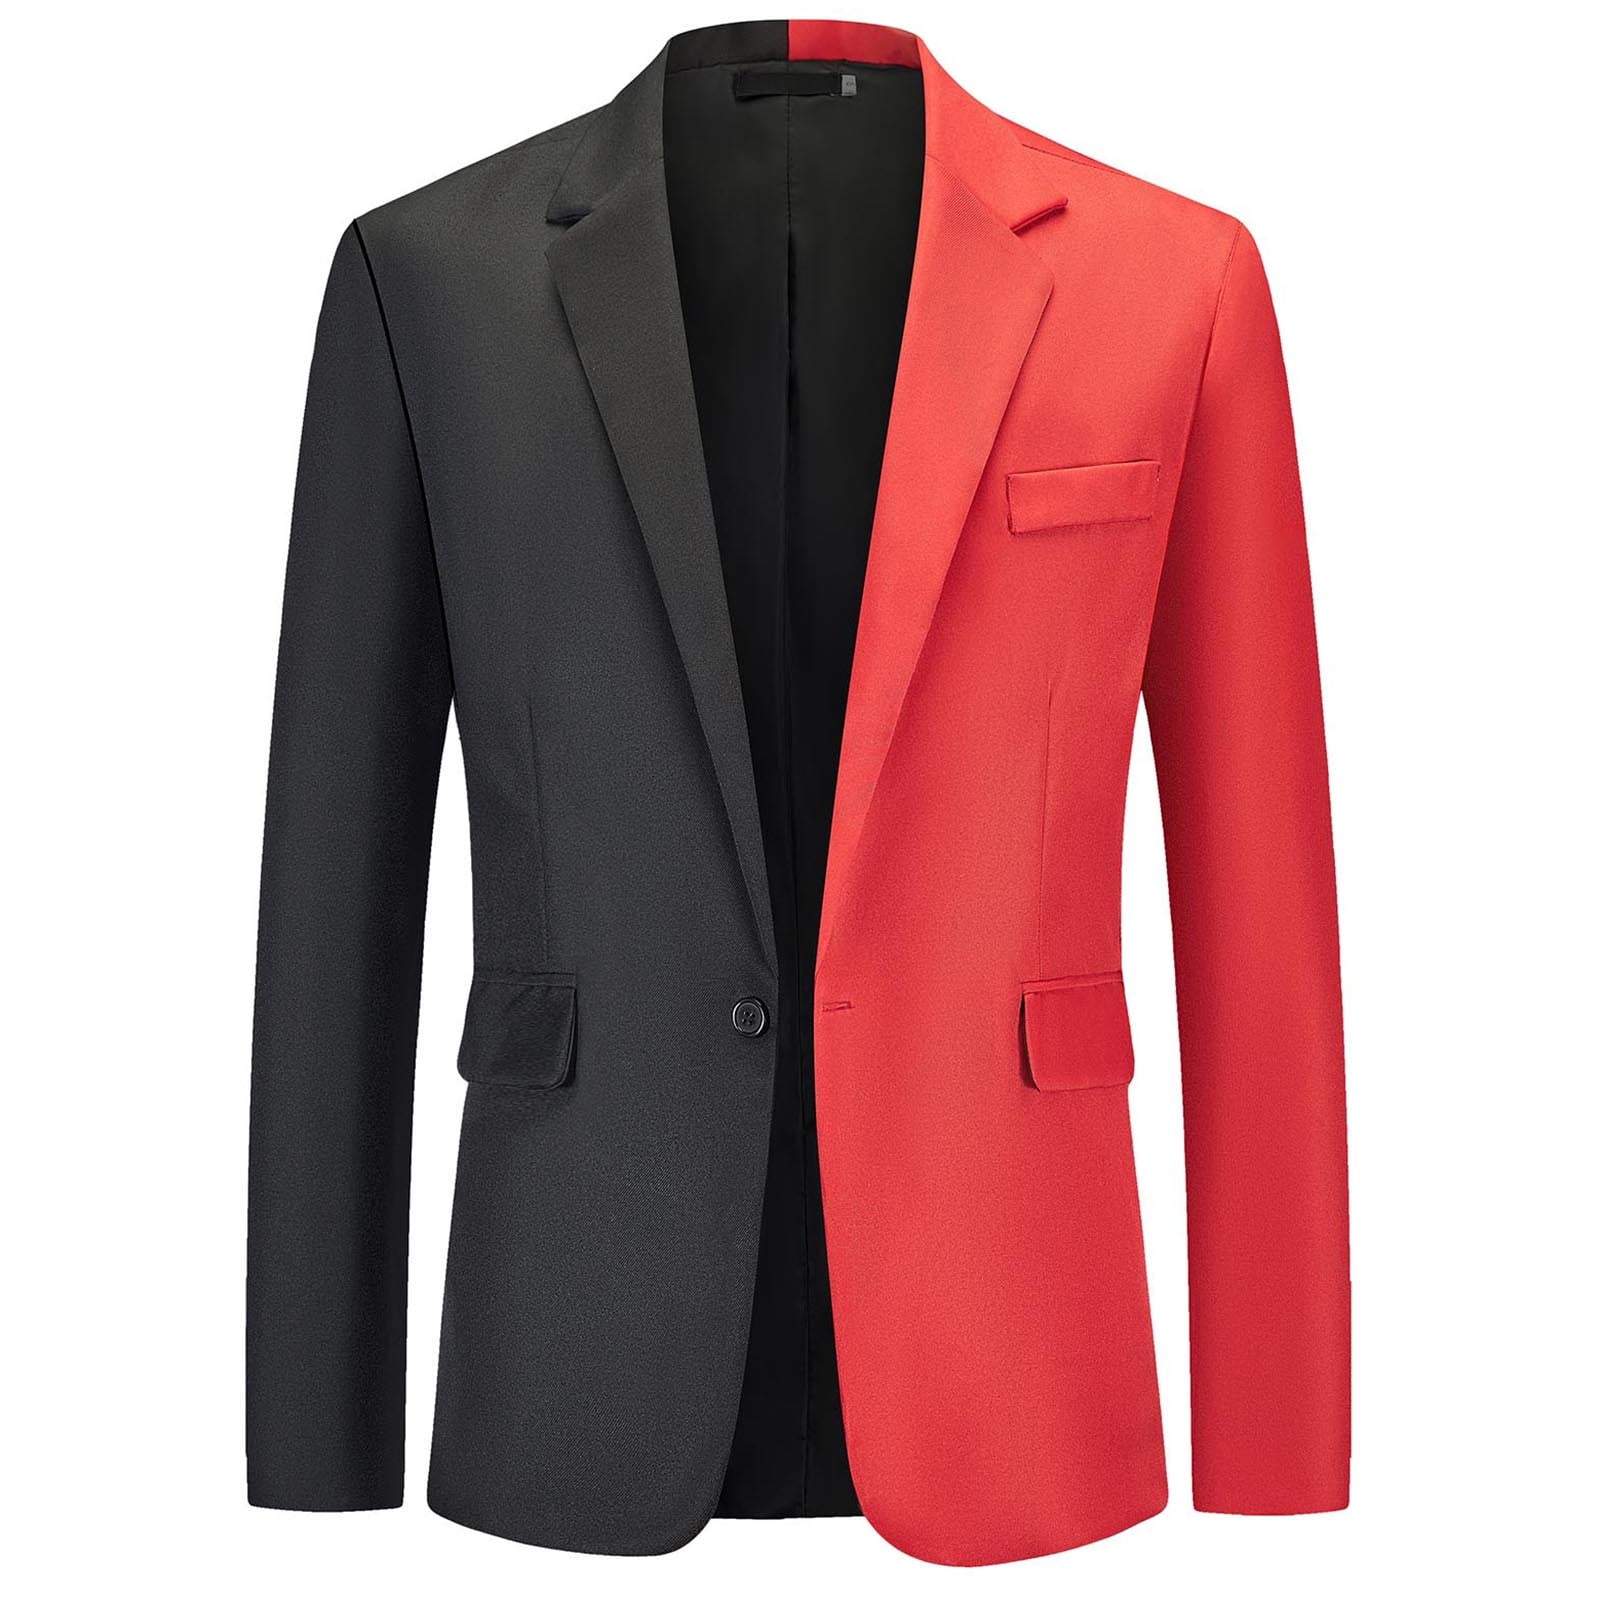 SMihono Men's Trendy Casual Suit Jacket Blazer Long Sleeve Tuxedo